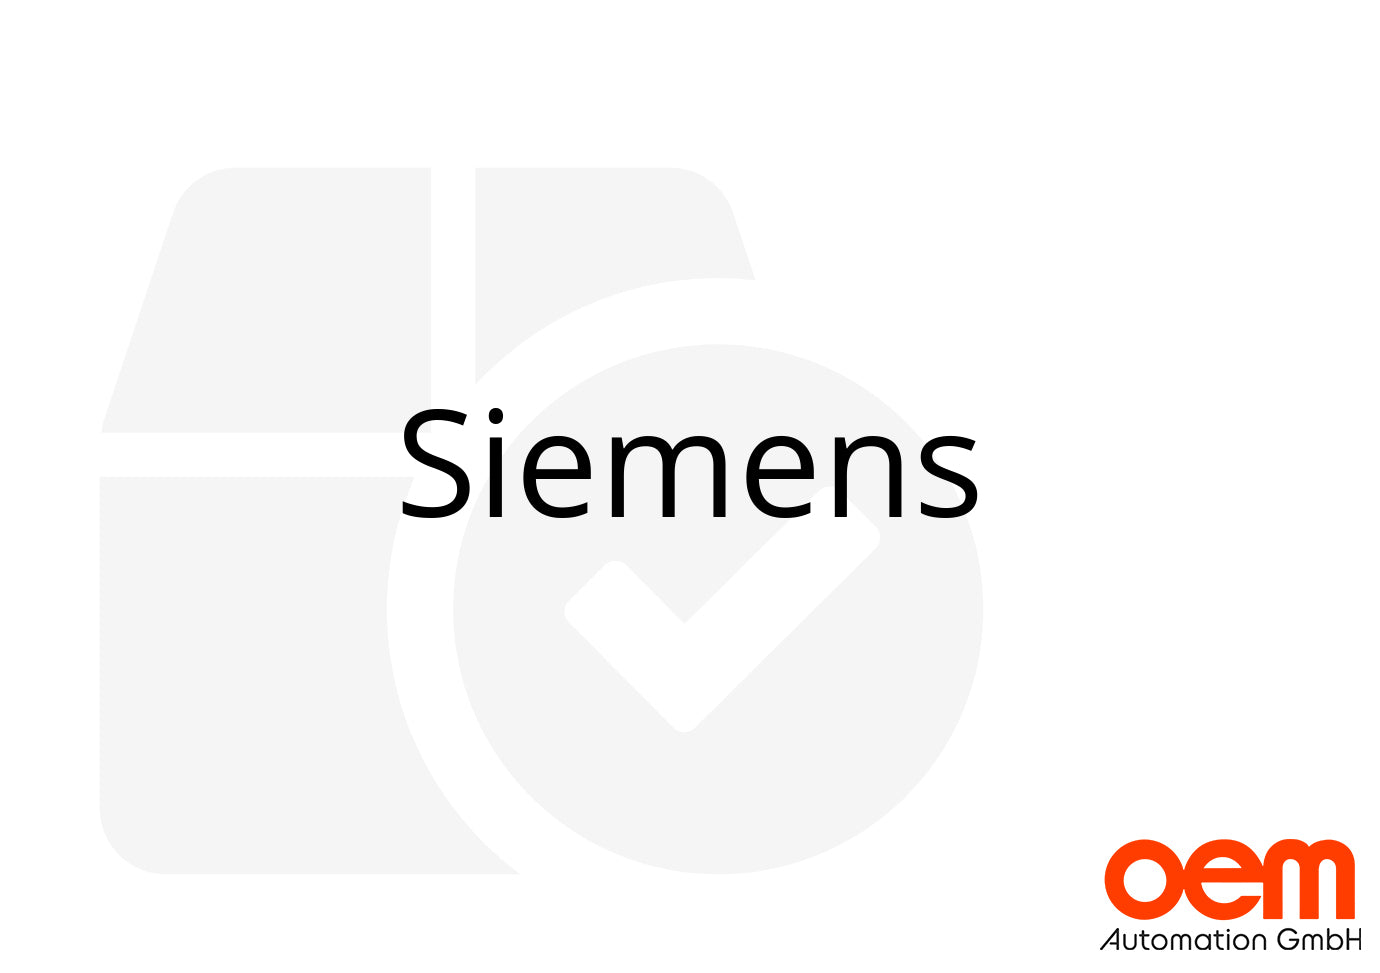 Siemens 3RV2021-4FA10